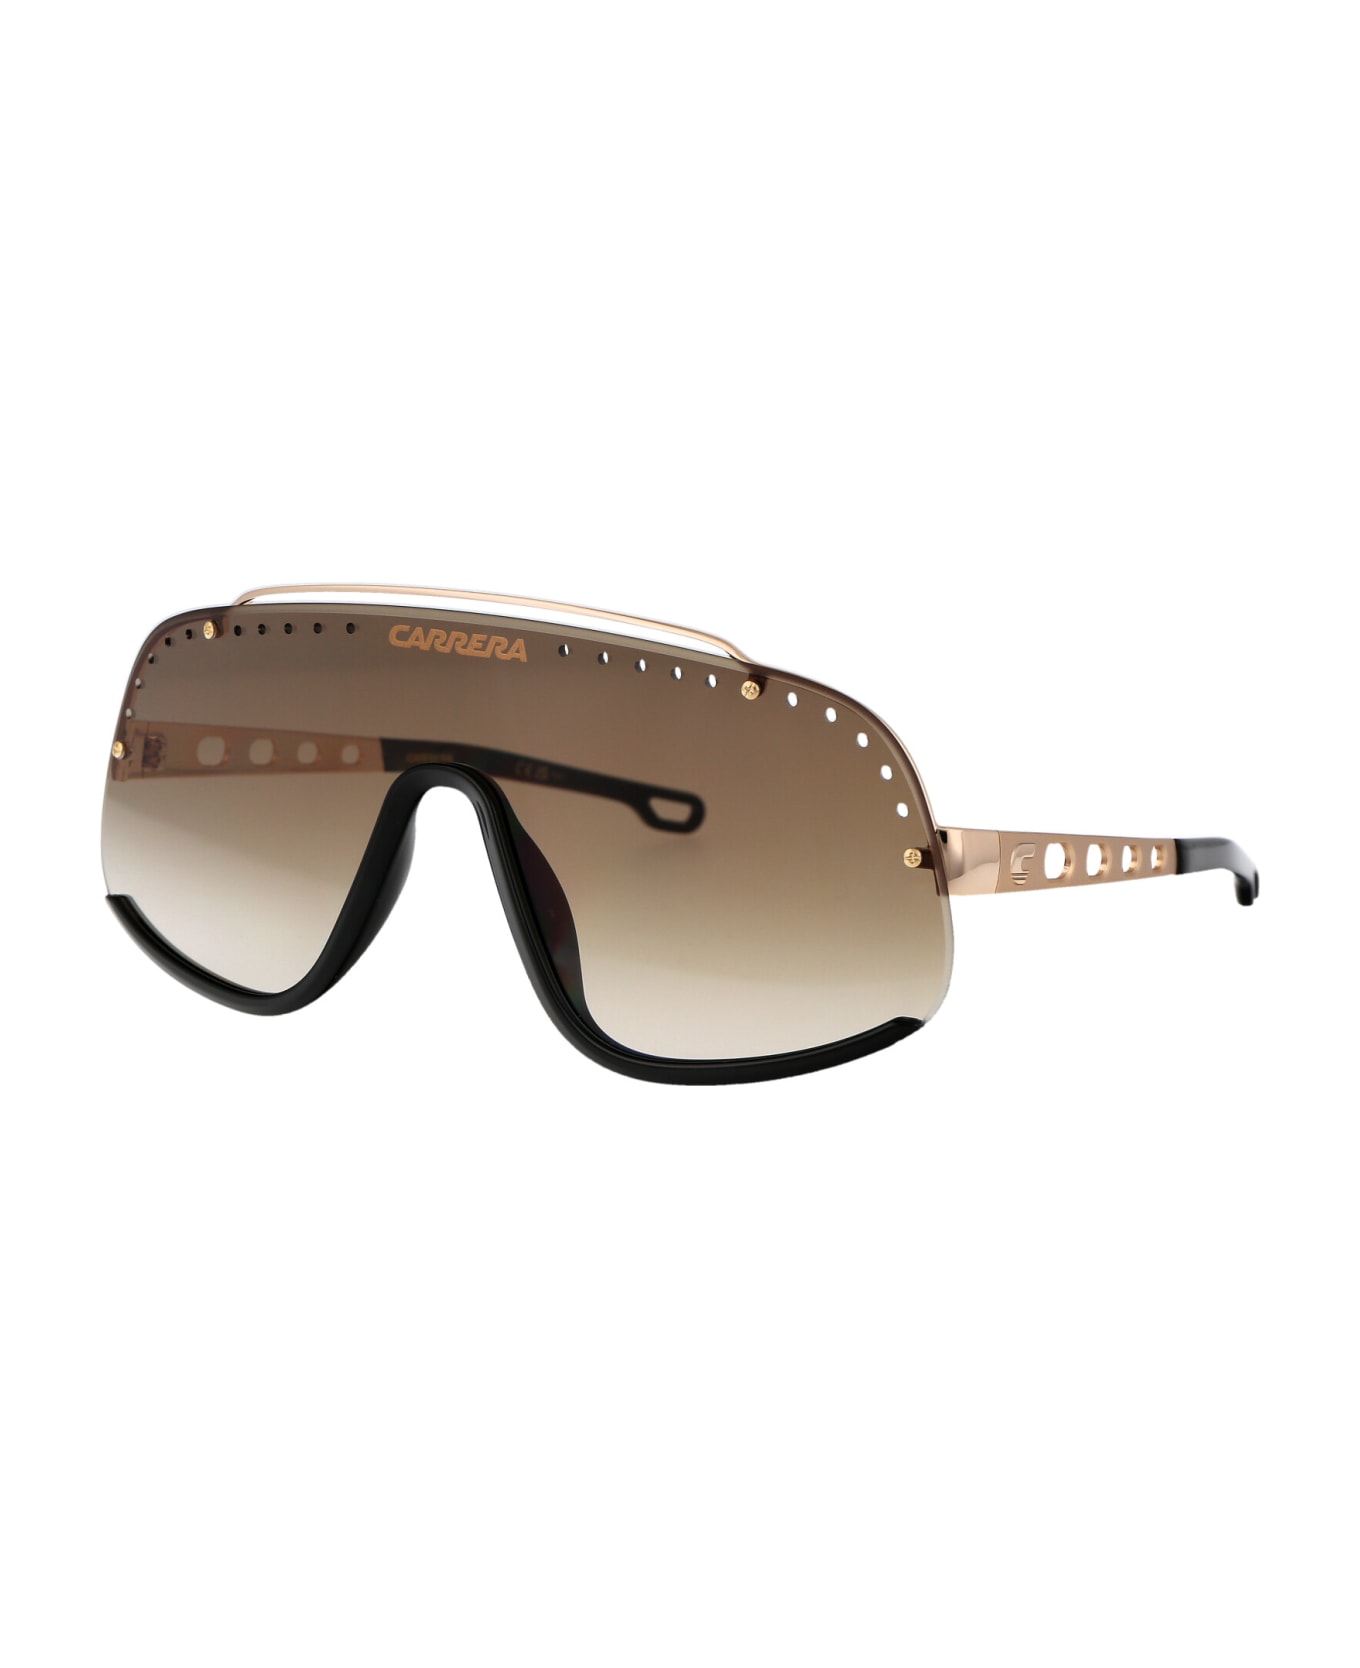 Carrera Flaglab 16 Sunglasses - FG486 BRWNGOLD B